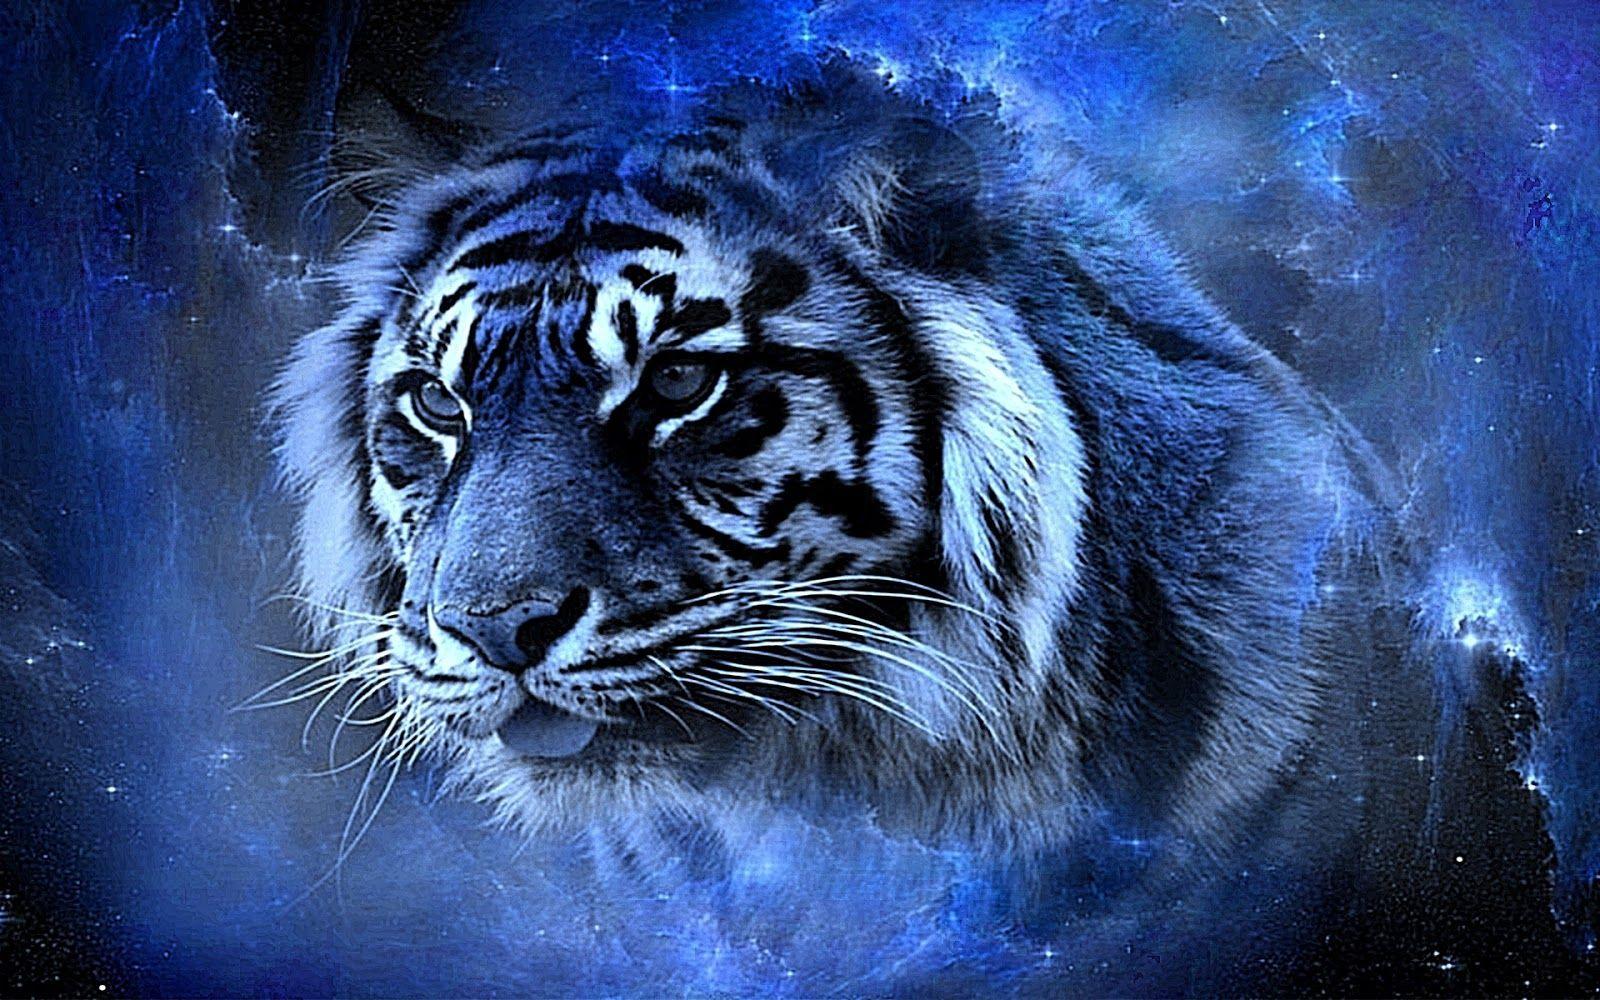 3D Cute Halloween Cat Wallpaper  2020 Live Wallpaper HD  Tiger wallpaper  Tiger poster Wild animal wallpaper